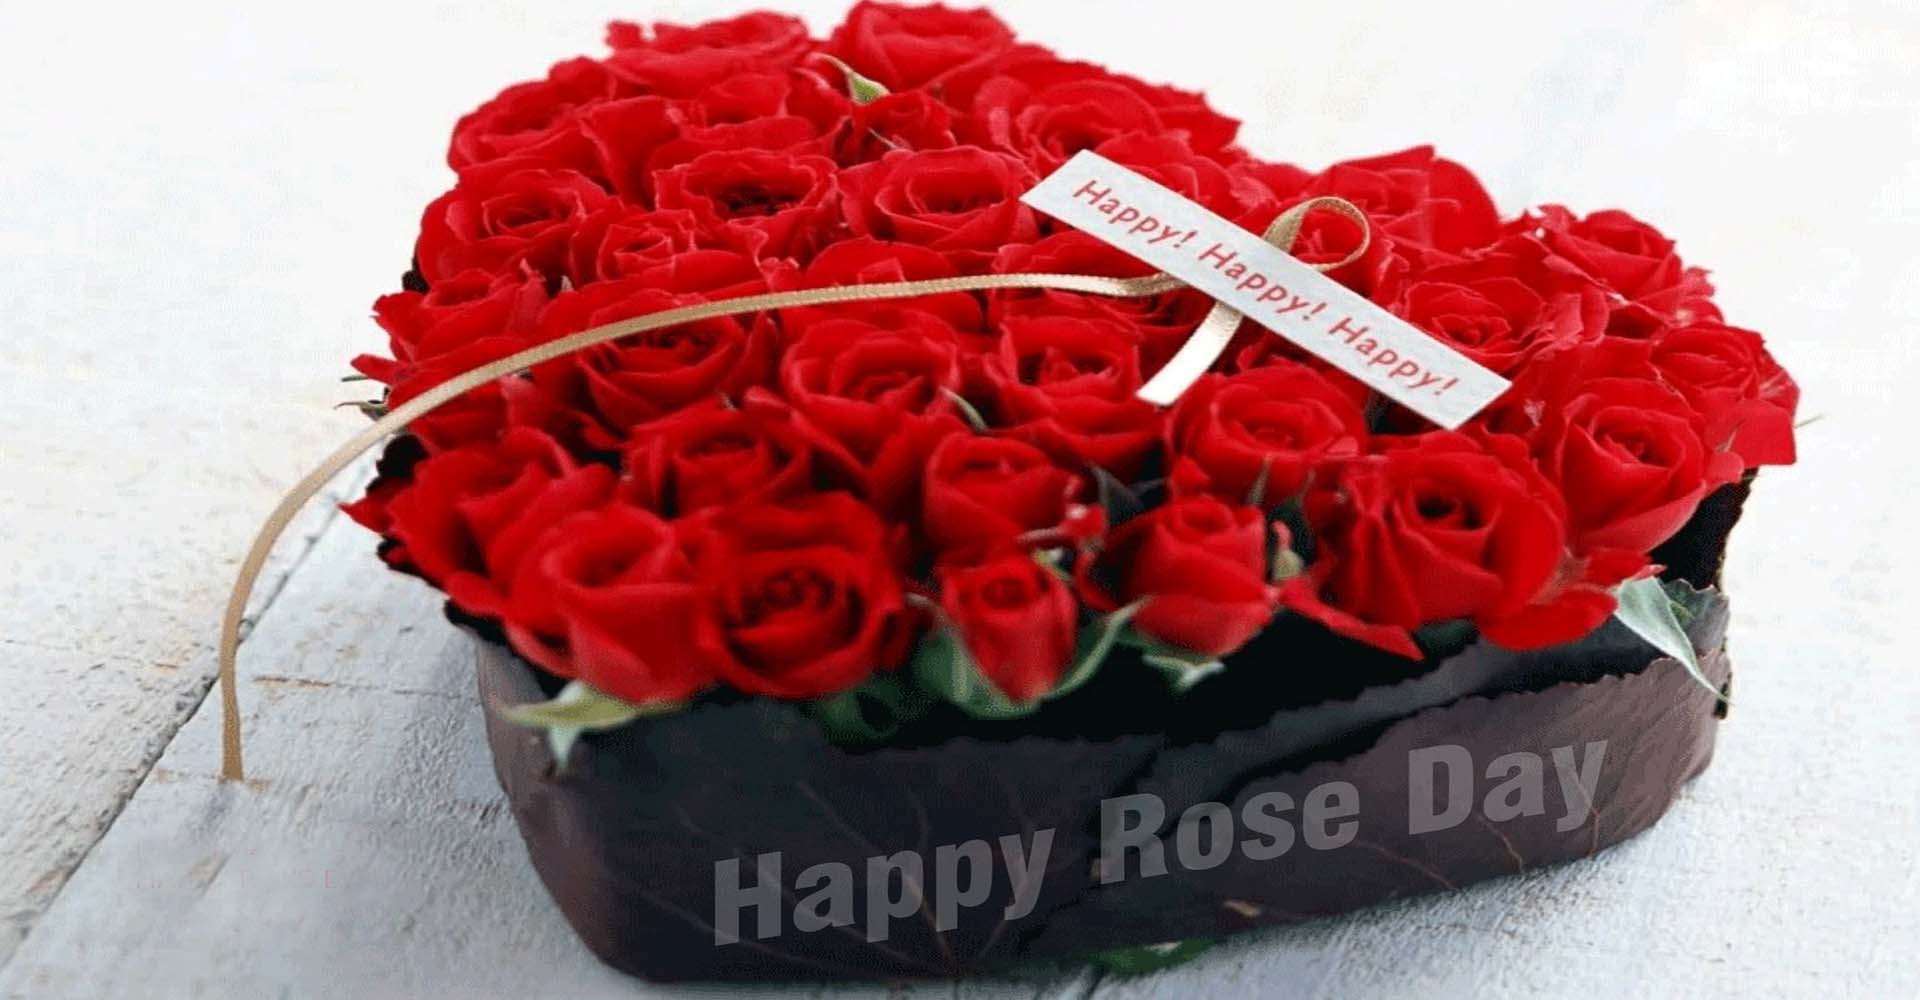 Stunning Happy Rose Day Wallpaper HD